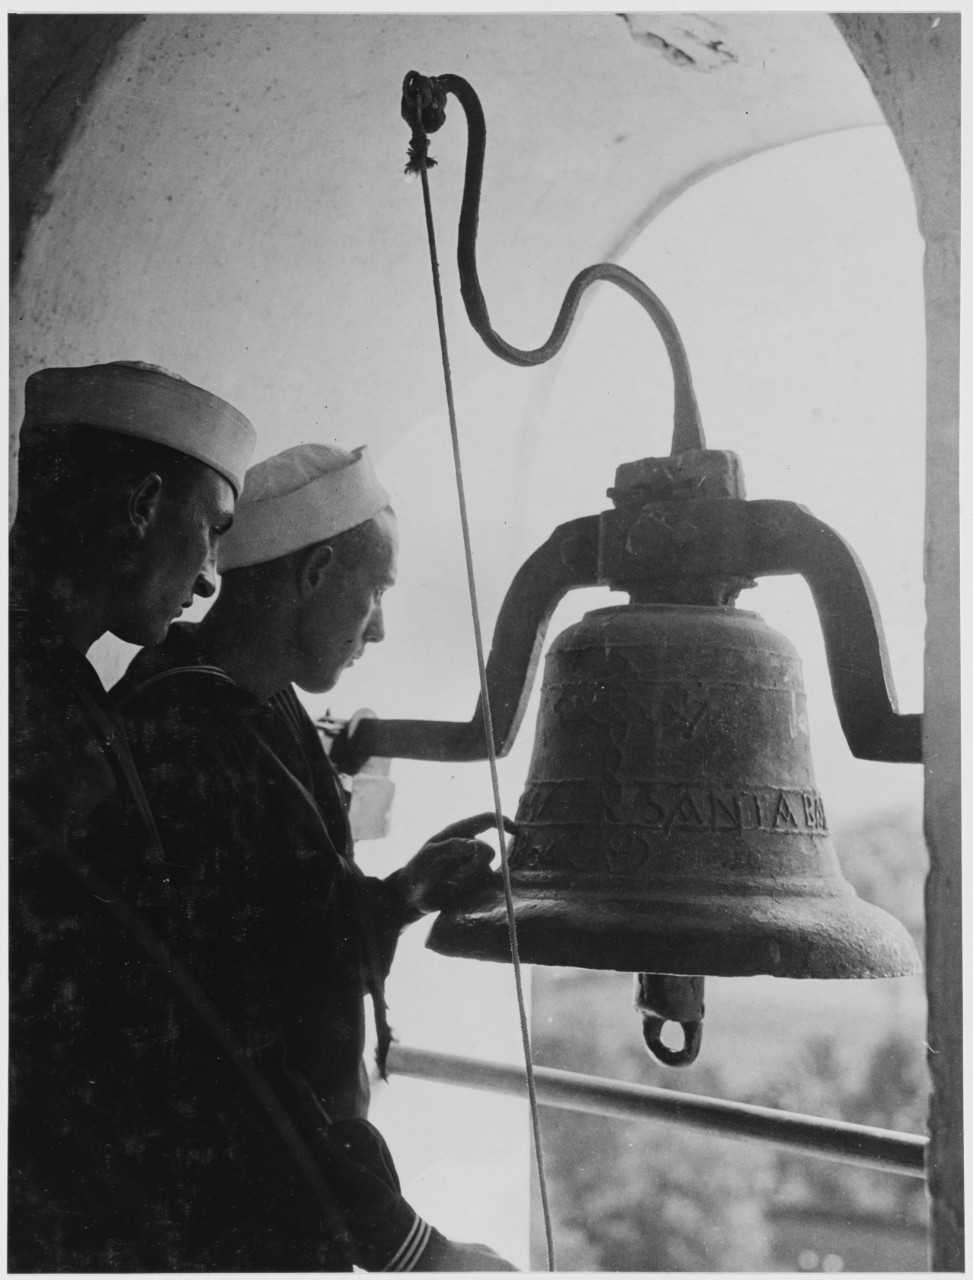 Men of the Pacific Fleet visiting the Santa Barbara Mission, Mission Bells